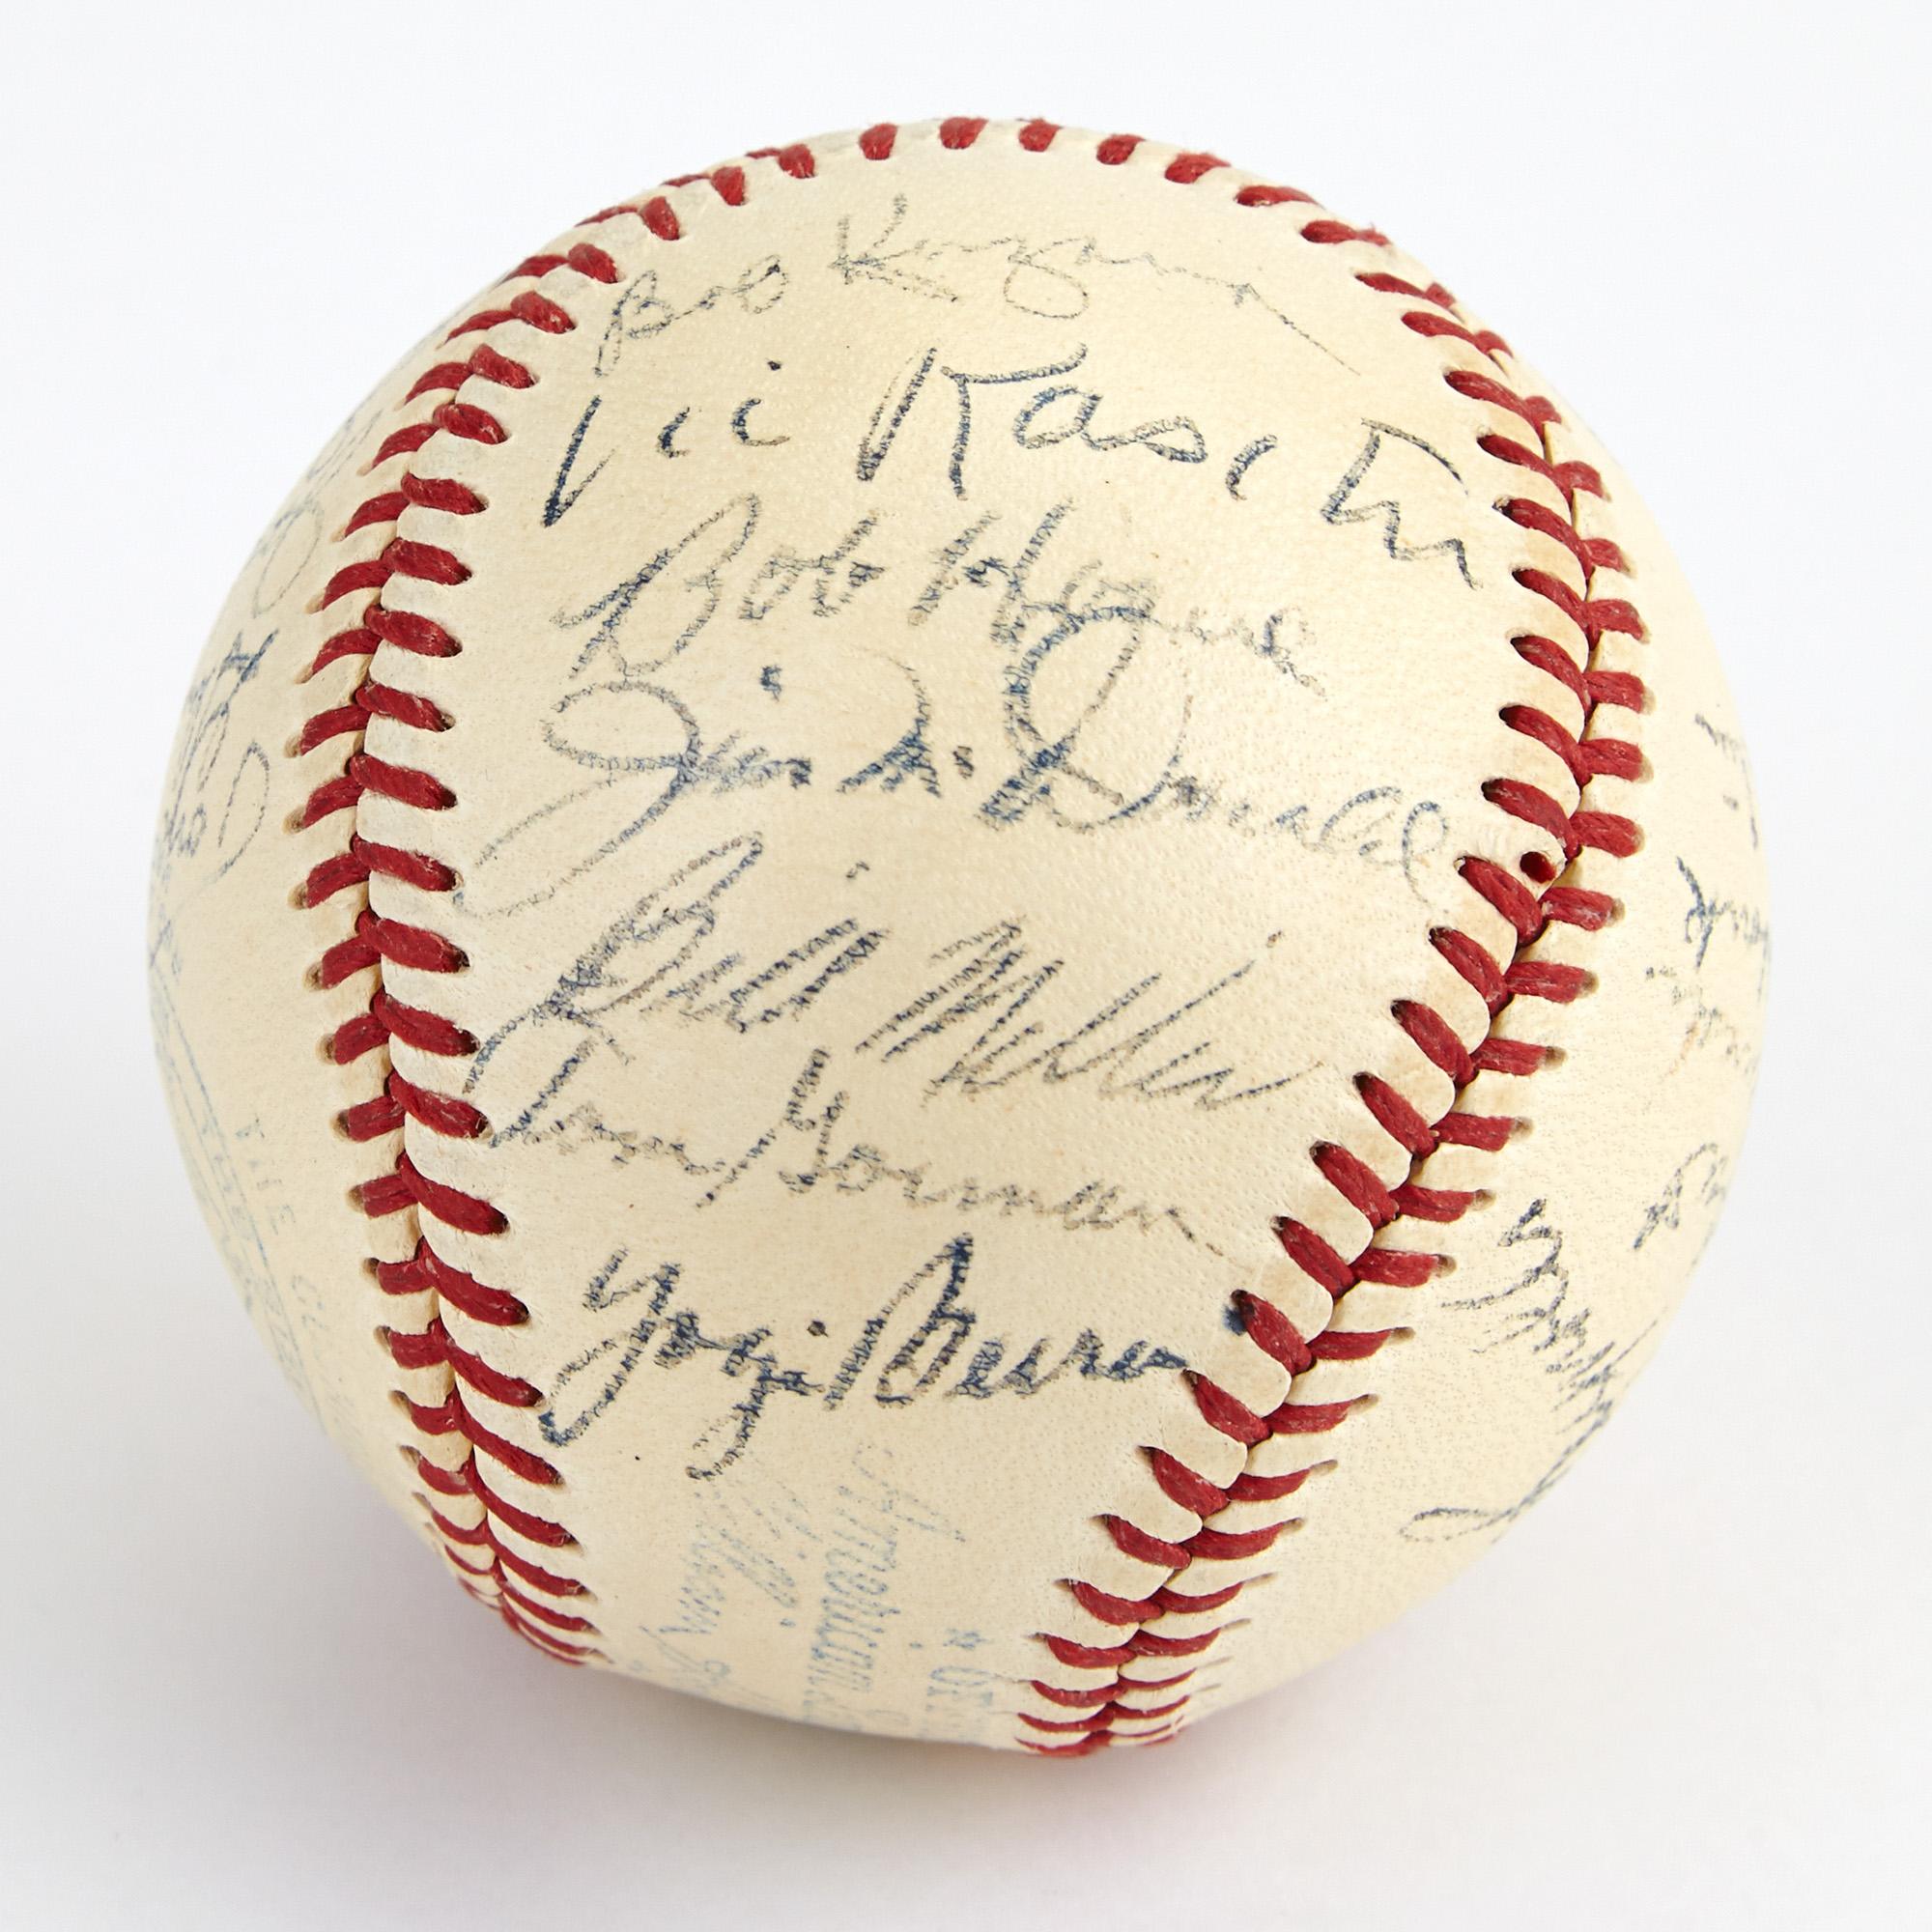 BASEBALL-SIGNED] 1952 New York Yankees signed baseball including